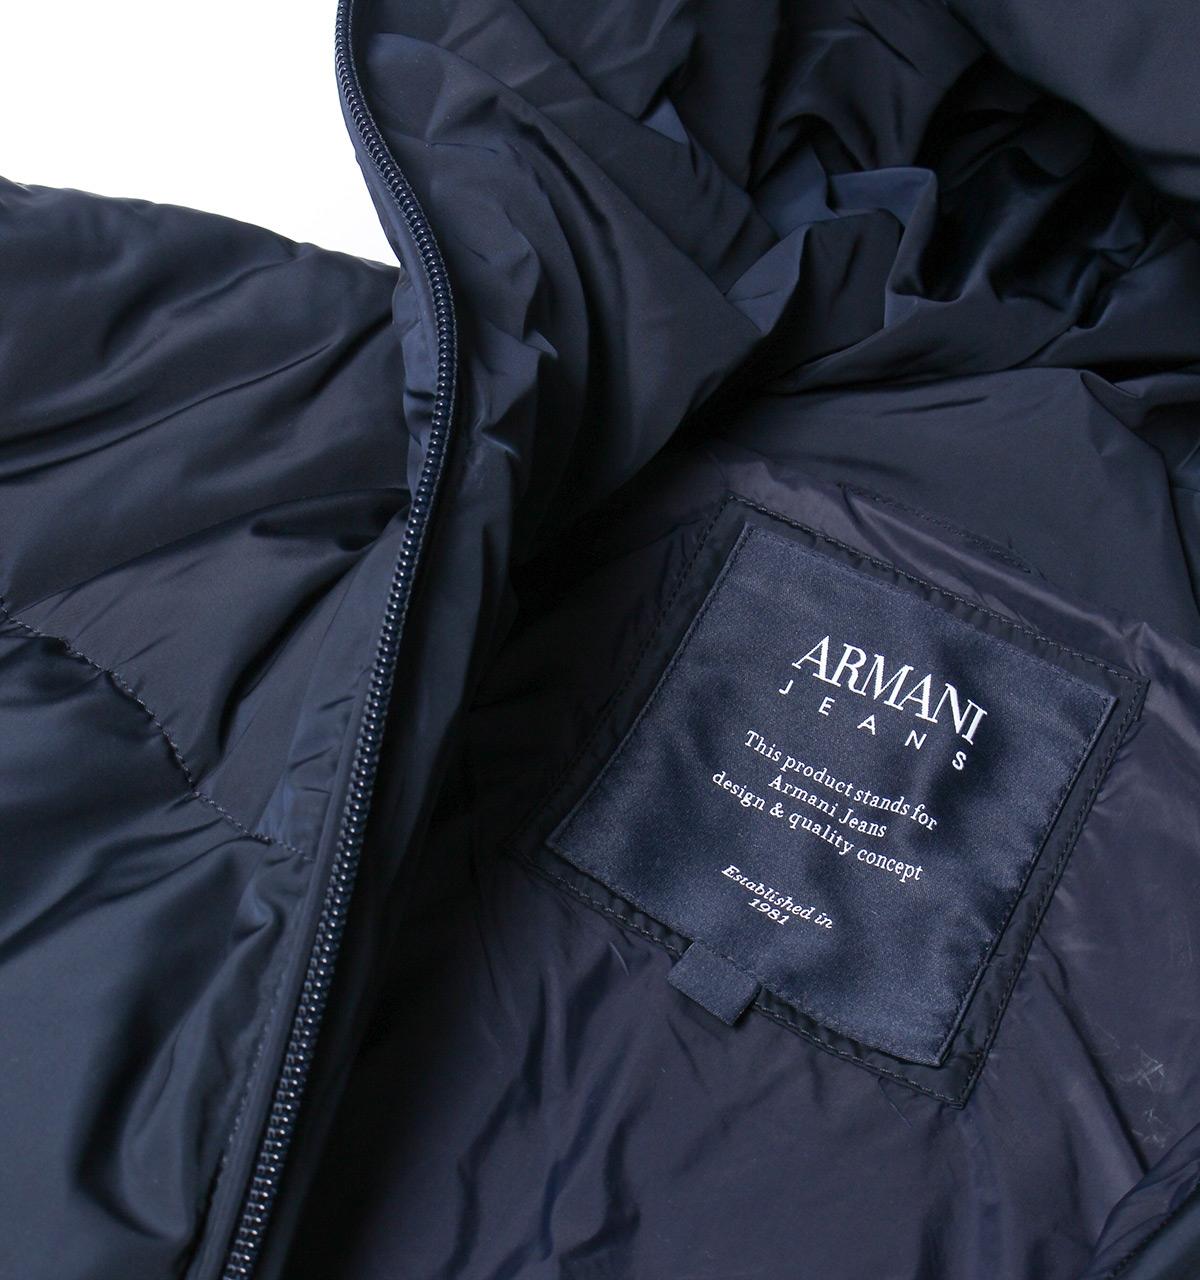 Armani Jeans Ca 37360 Jacket Clearance, Save 42% | jlcatj.gob.mx